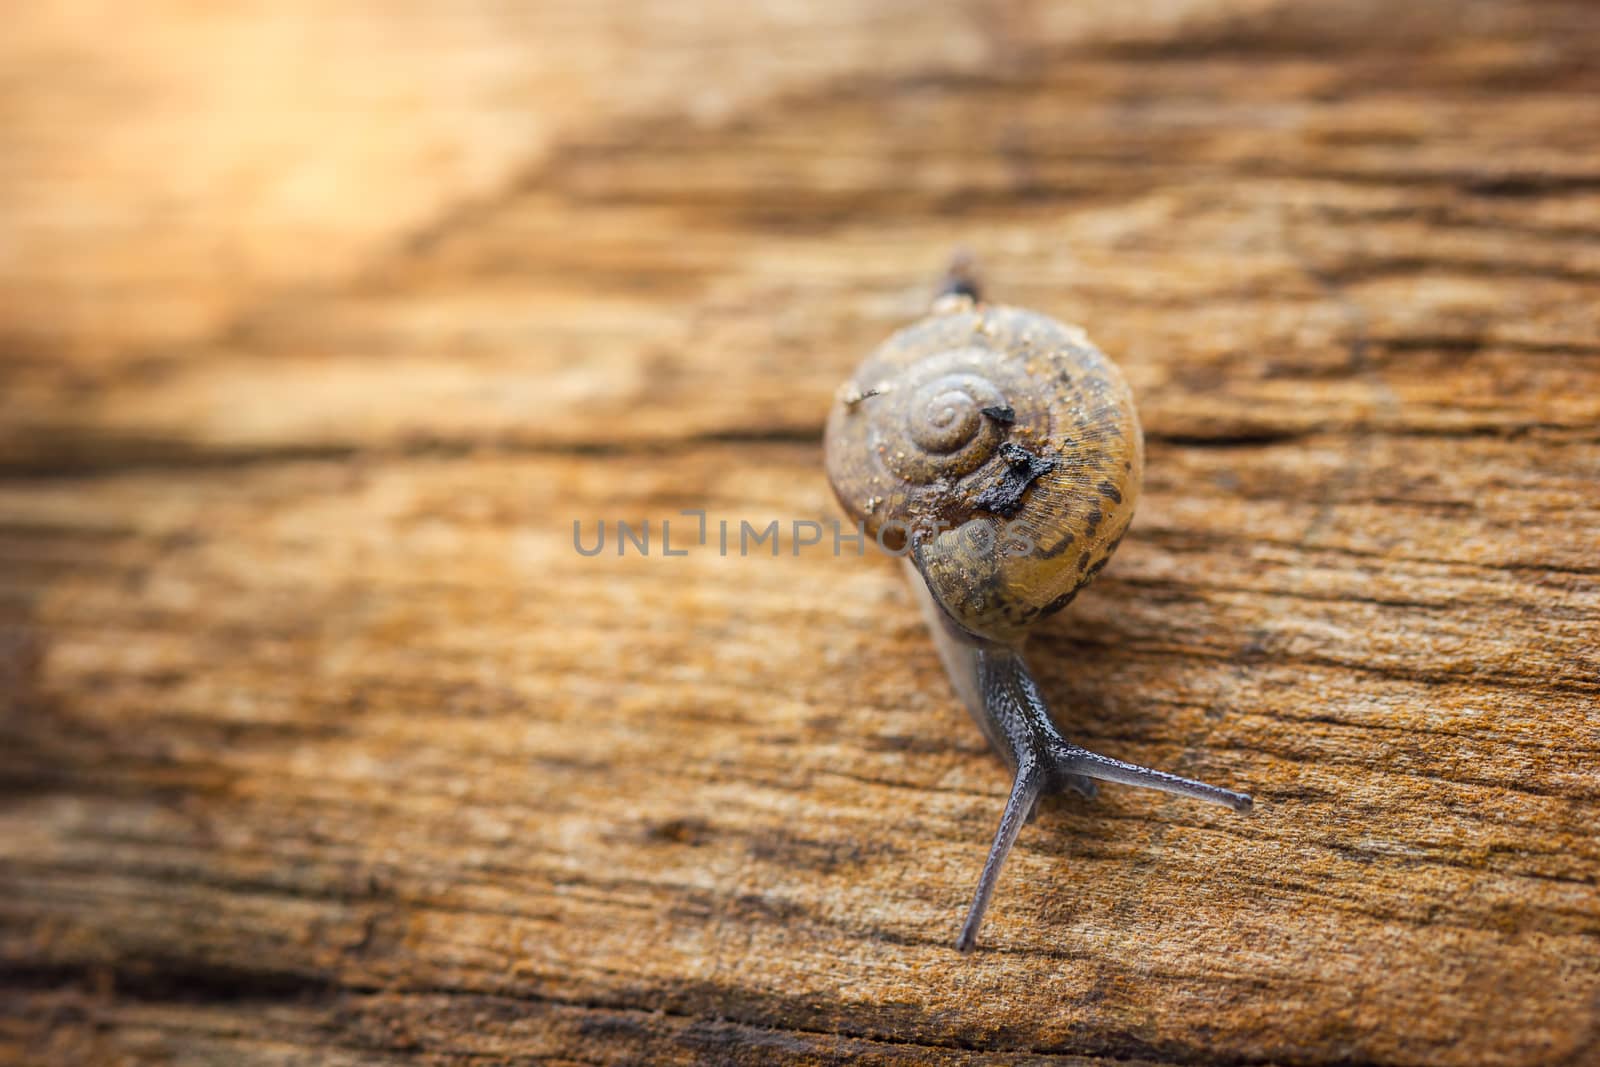 Snail waking on dry wood in rainy season and morning sunlight. C by SaitanSainam